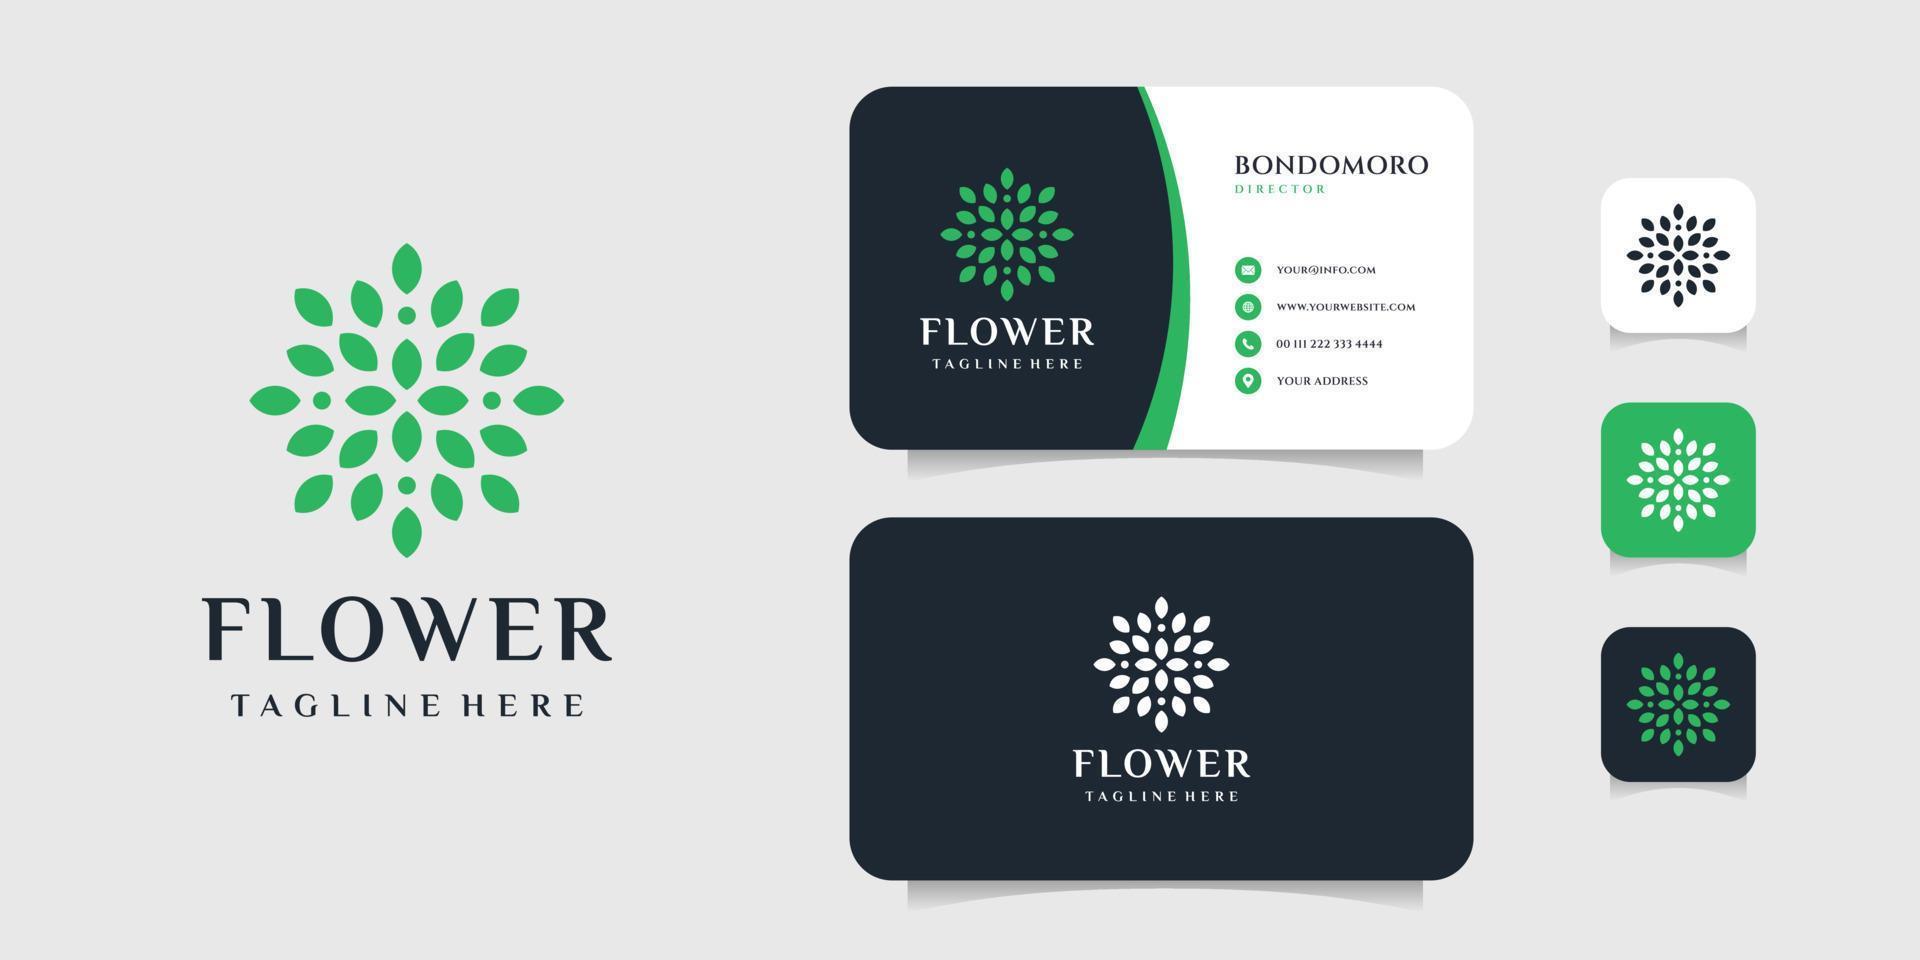 Set of flower logo and business card design vector inspiration template